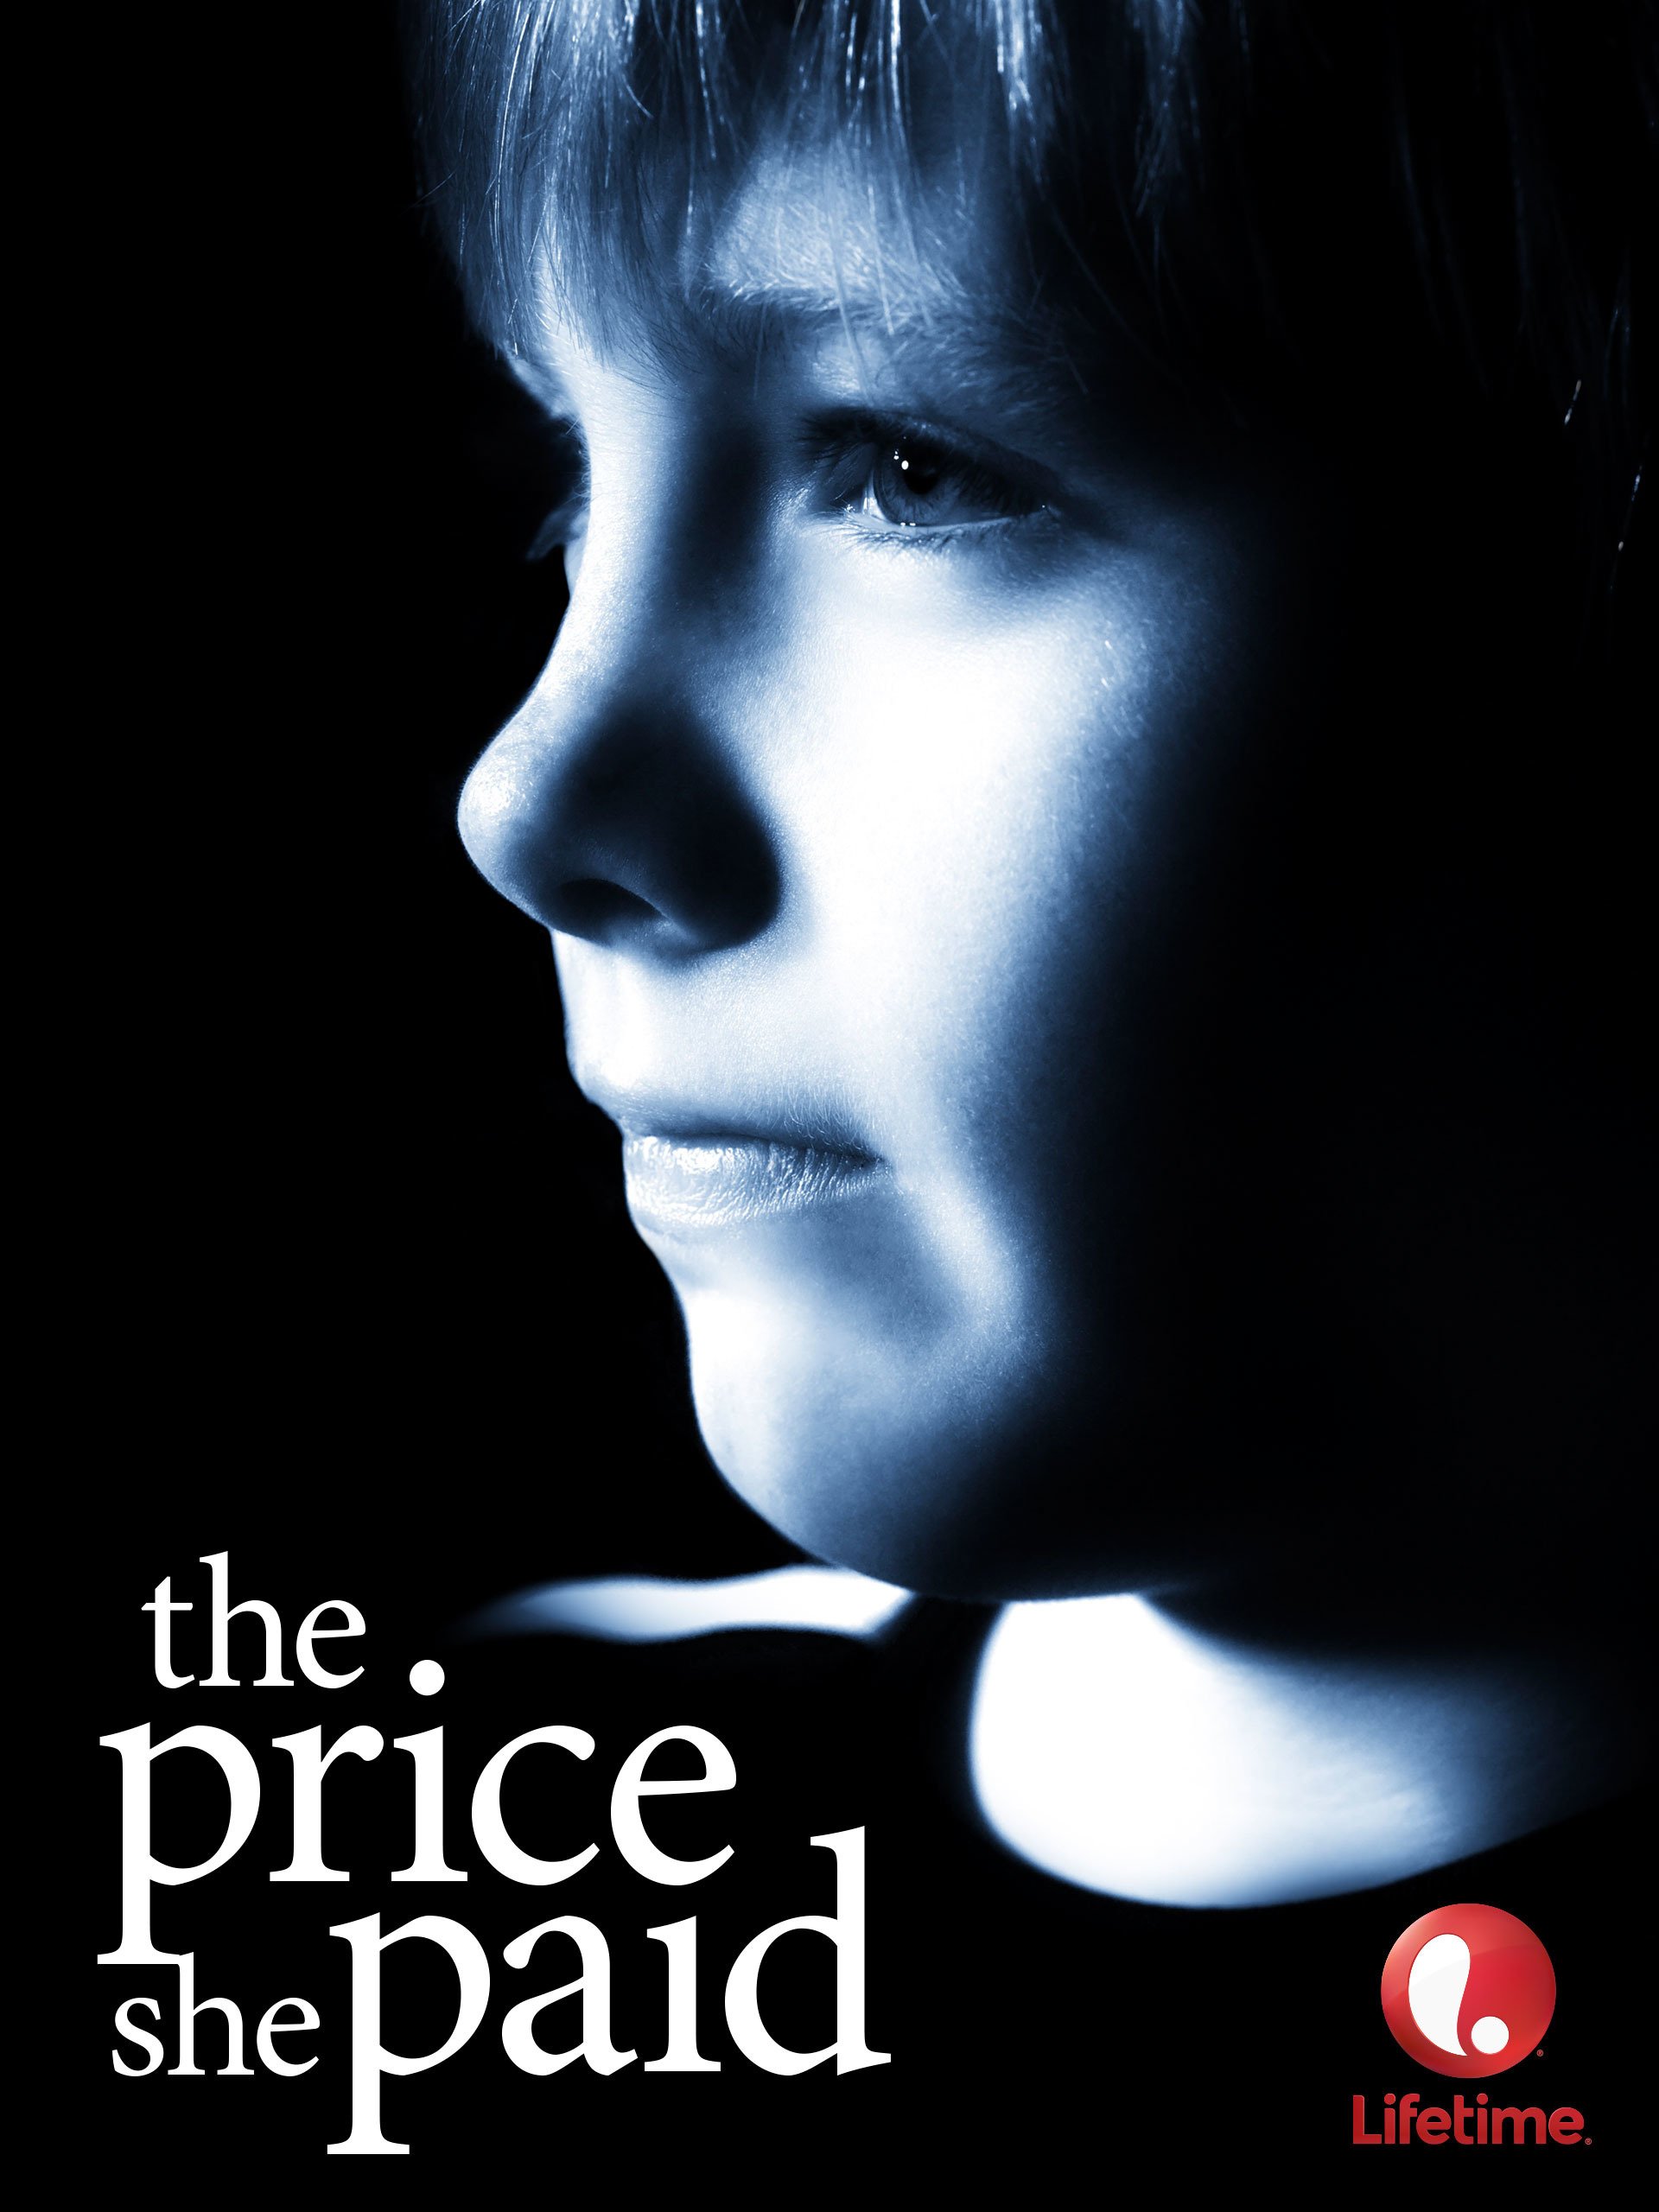 The Price She Paid (1992) Screenshot 2 